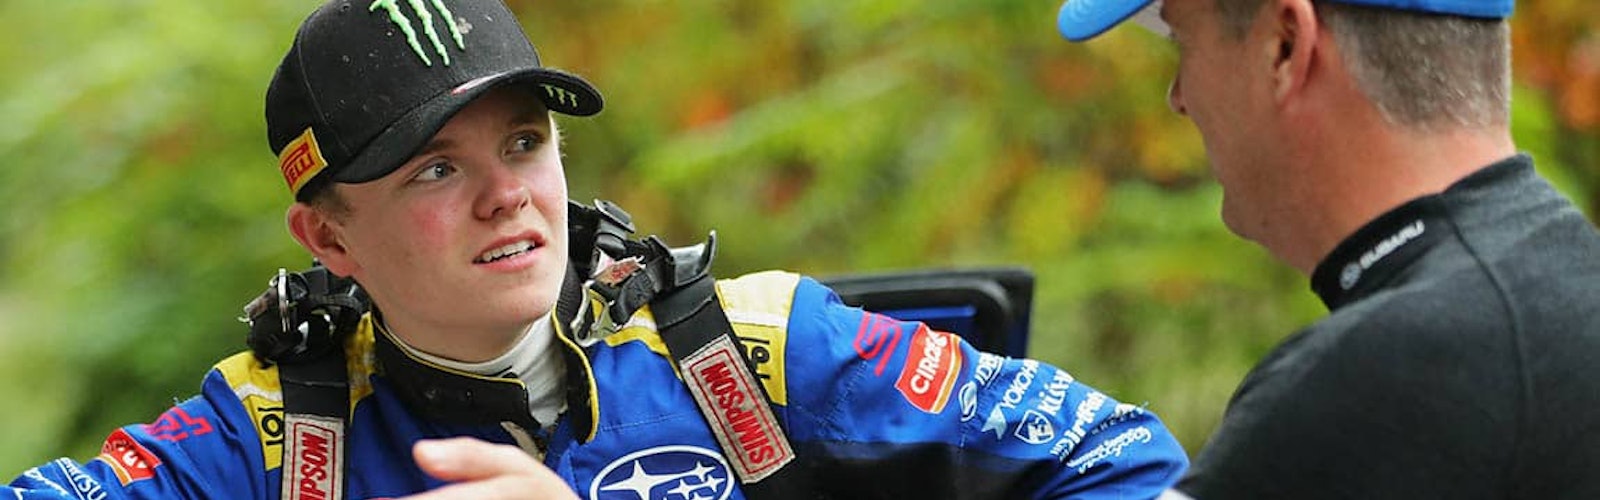 Oliver Solberg with Subaru Motorsports USA